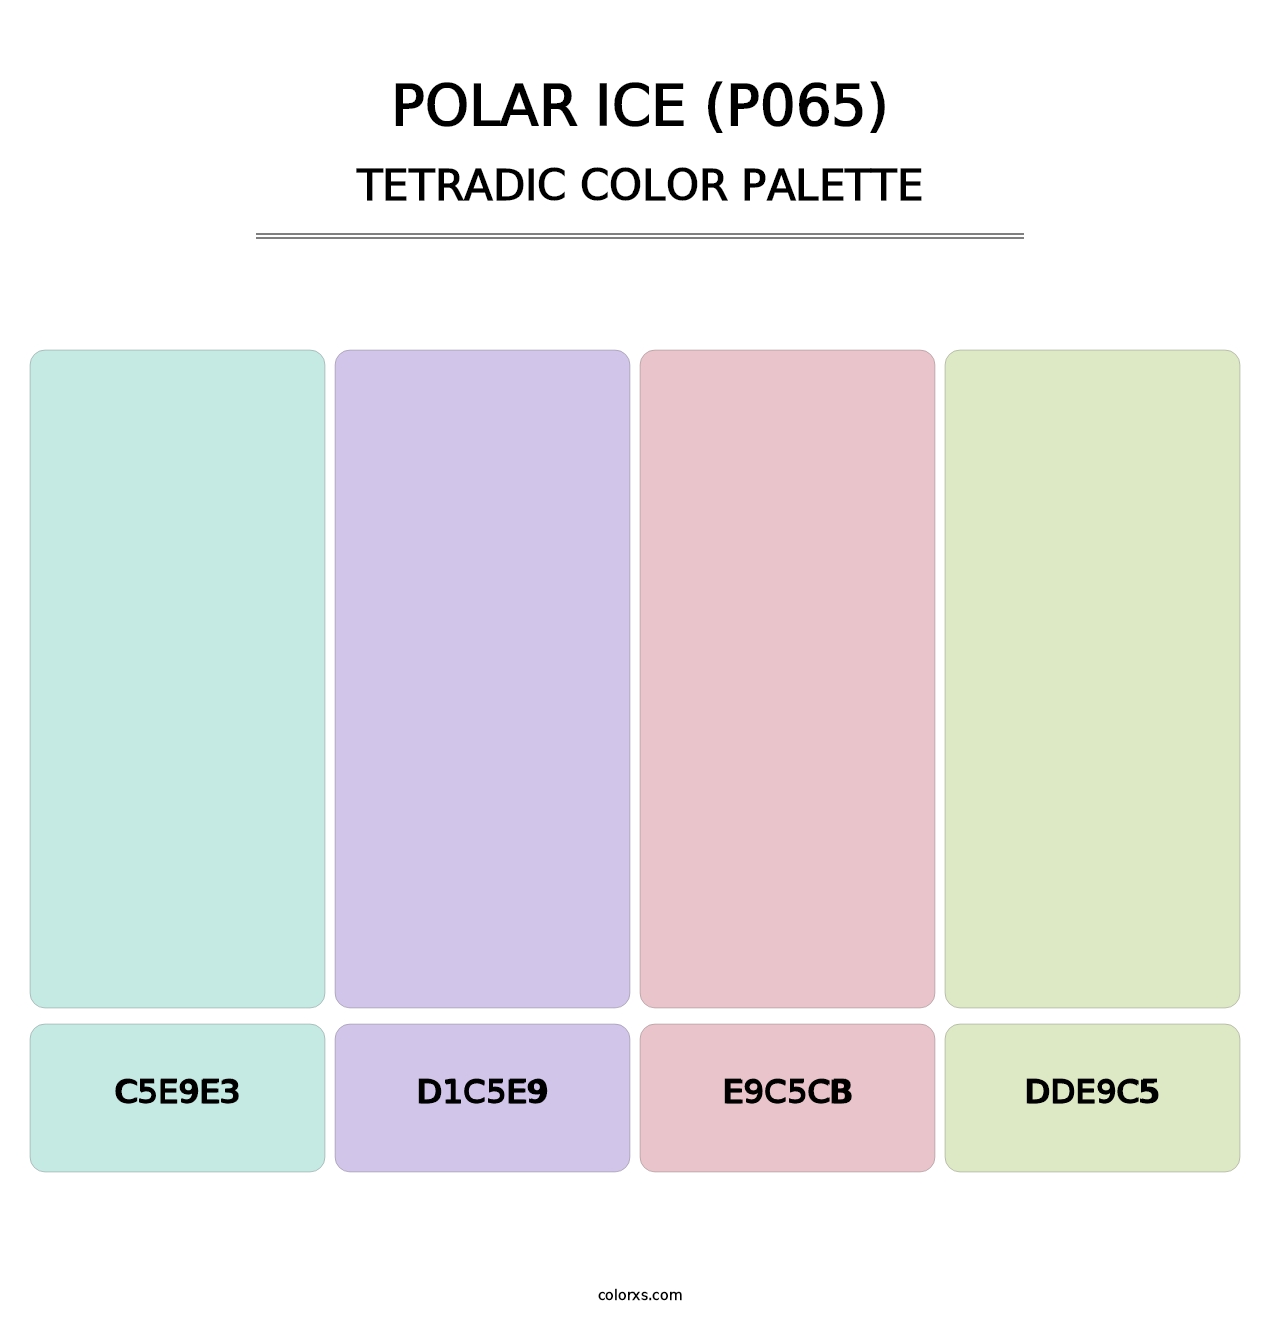 Polar Ice (P065) - Tetradic Color Palette